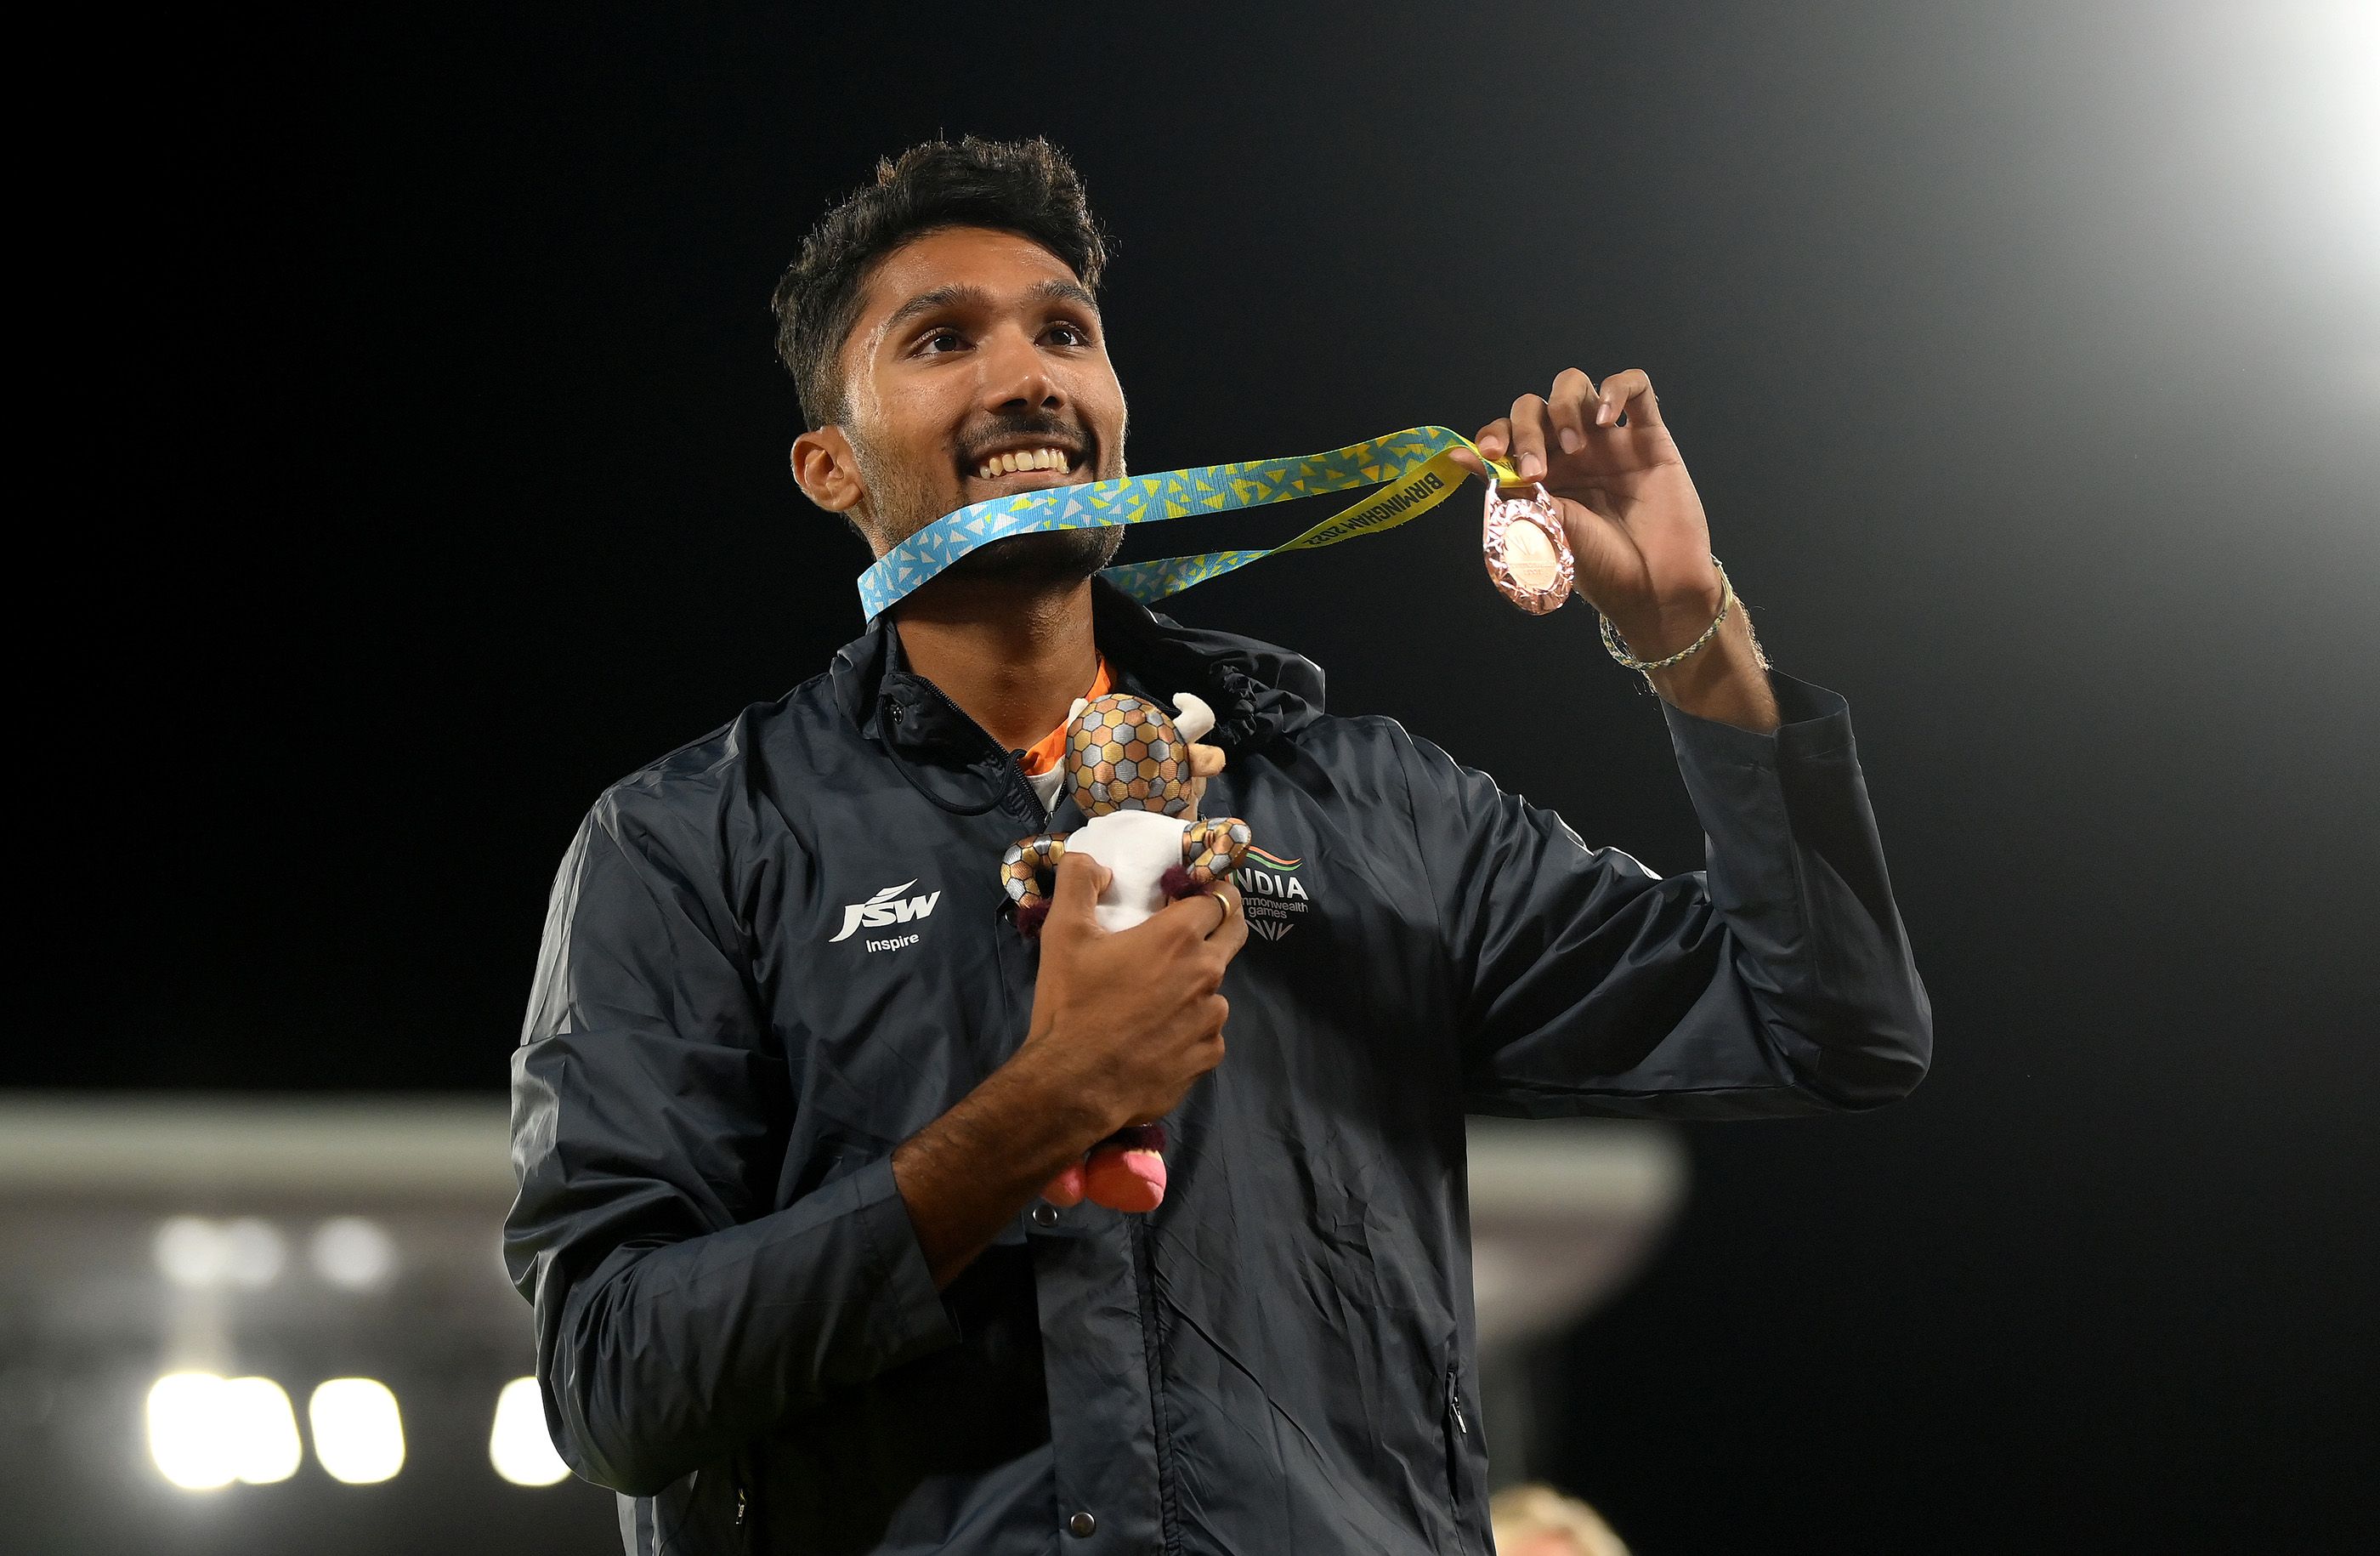 Tejaswin Shankar celebrates his bronze medal at the Commonwealth Games in Birmingham